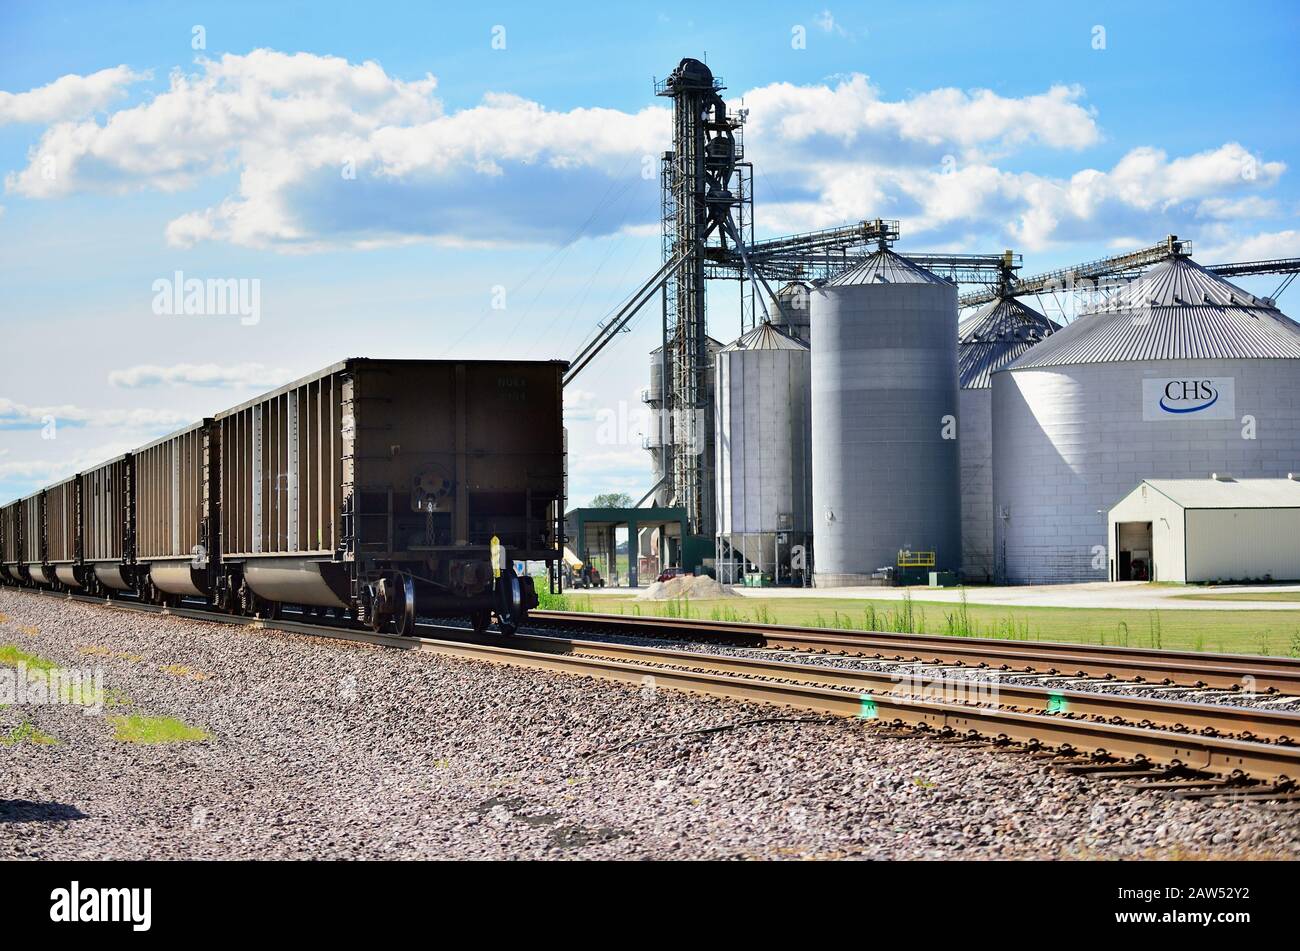 Elburn, Illinois, USA. A Union Pacific freight train passing a large farming cooperative in northeastern Illinois. Stock Photo